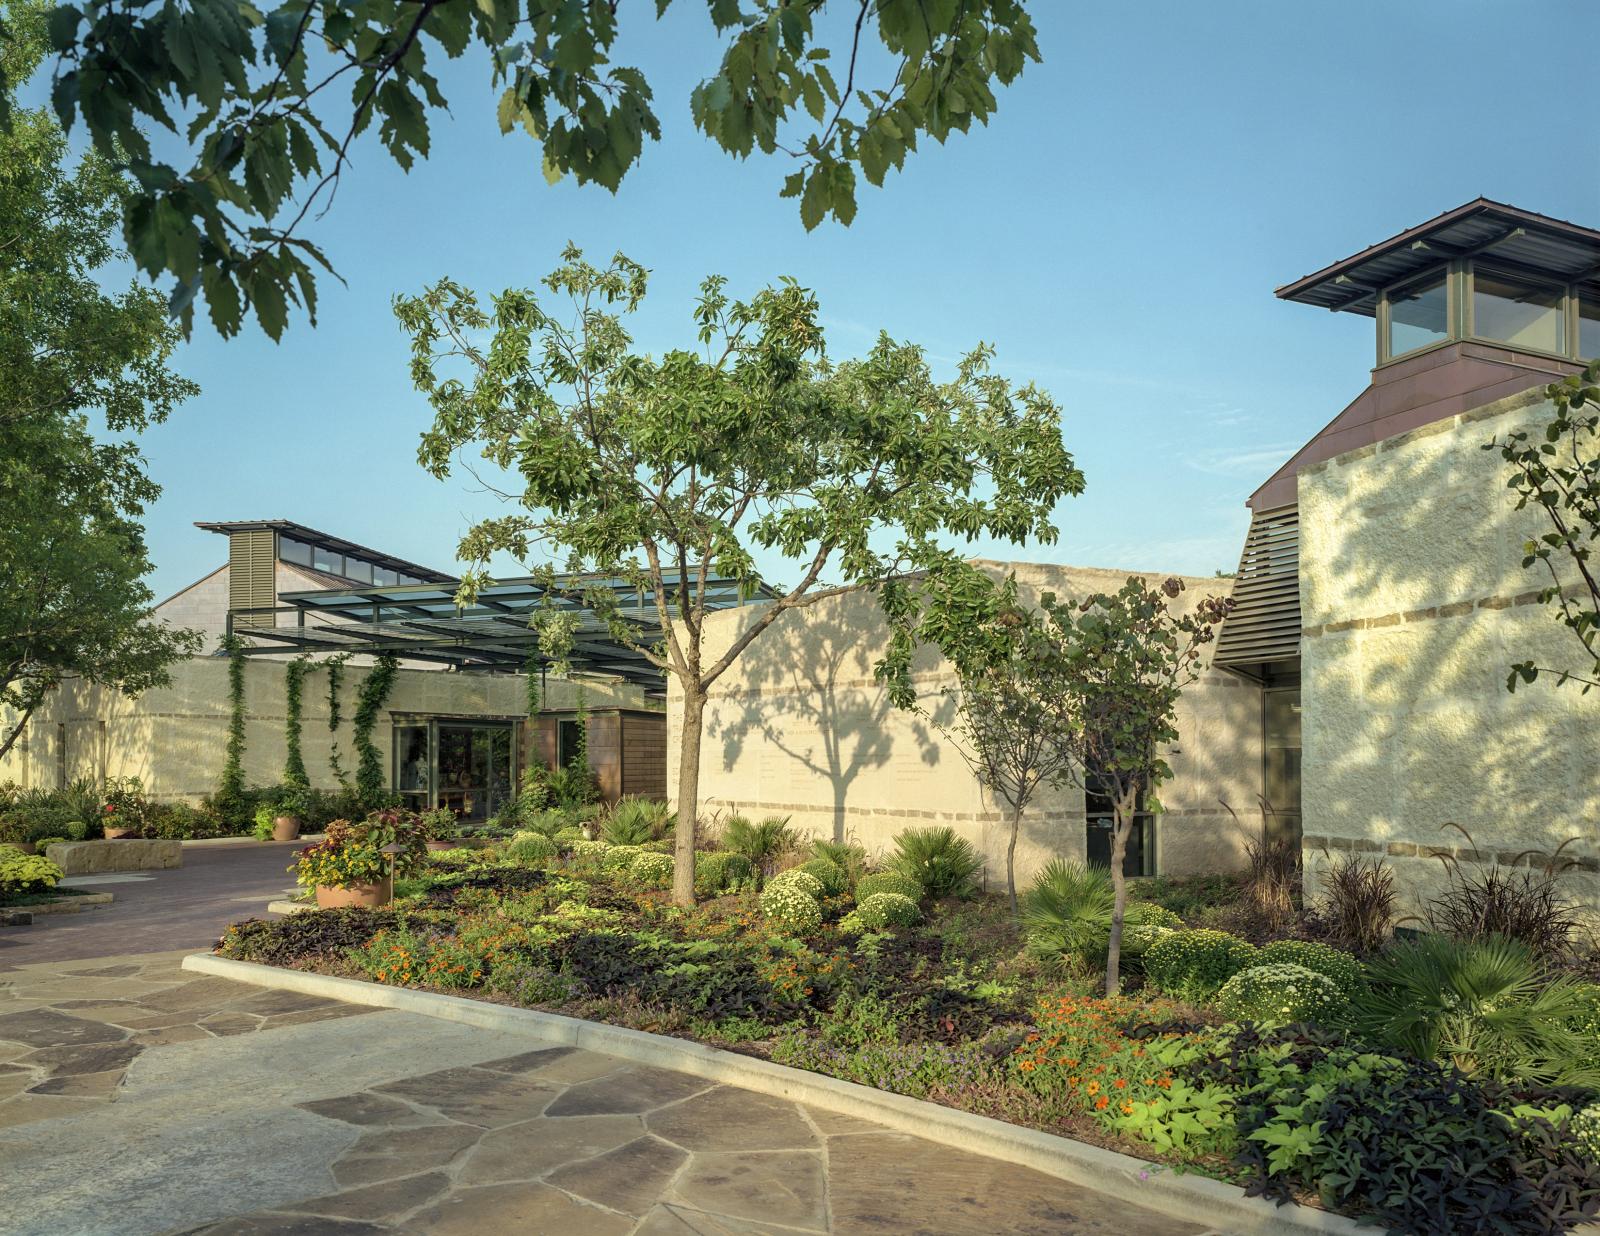 RLG Dallas Arboretum's Trammell Crow Visitor Education Pavilion